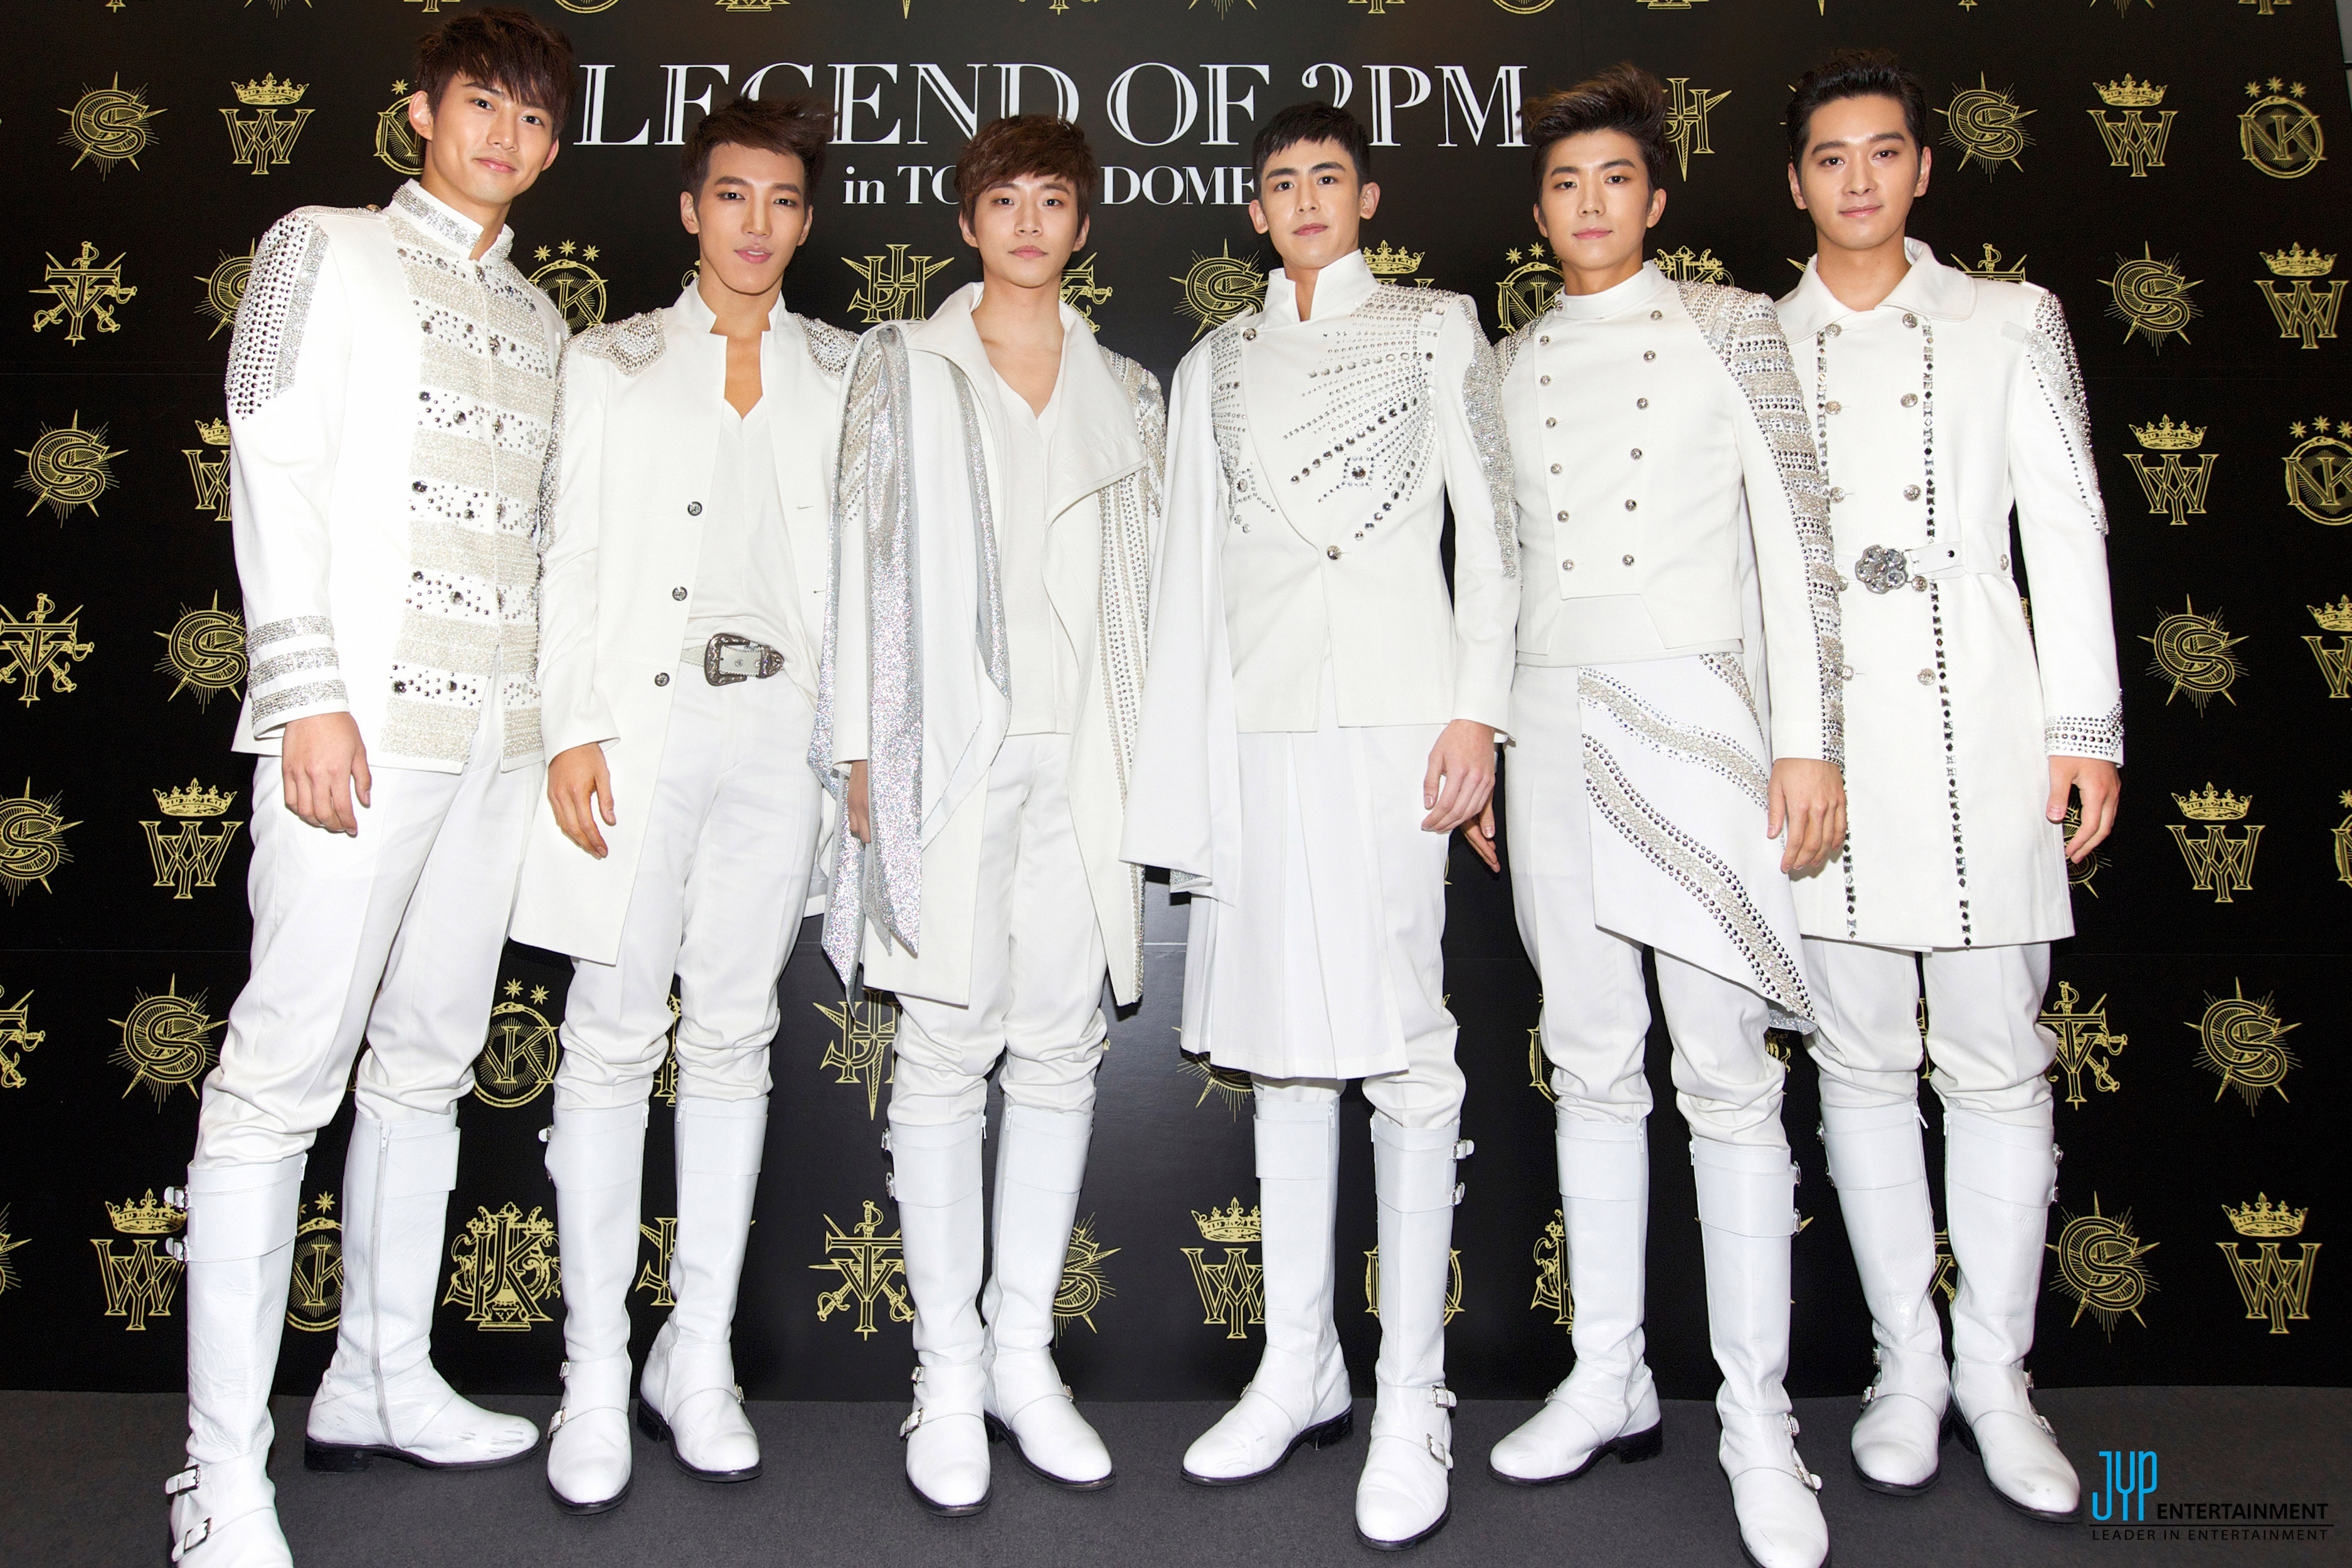 LEGEND OF 2PM in TOKYO DOME [DVD] rdzdsi3